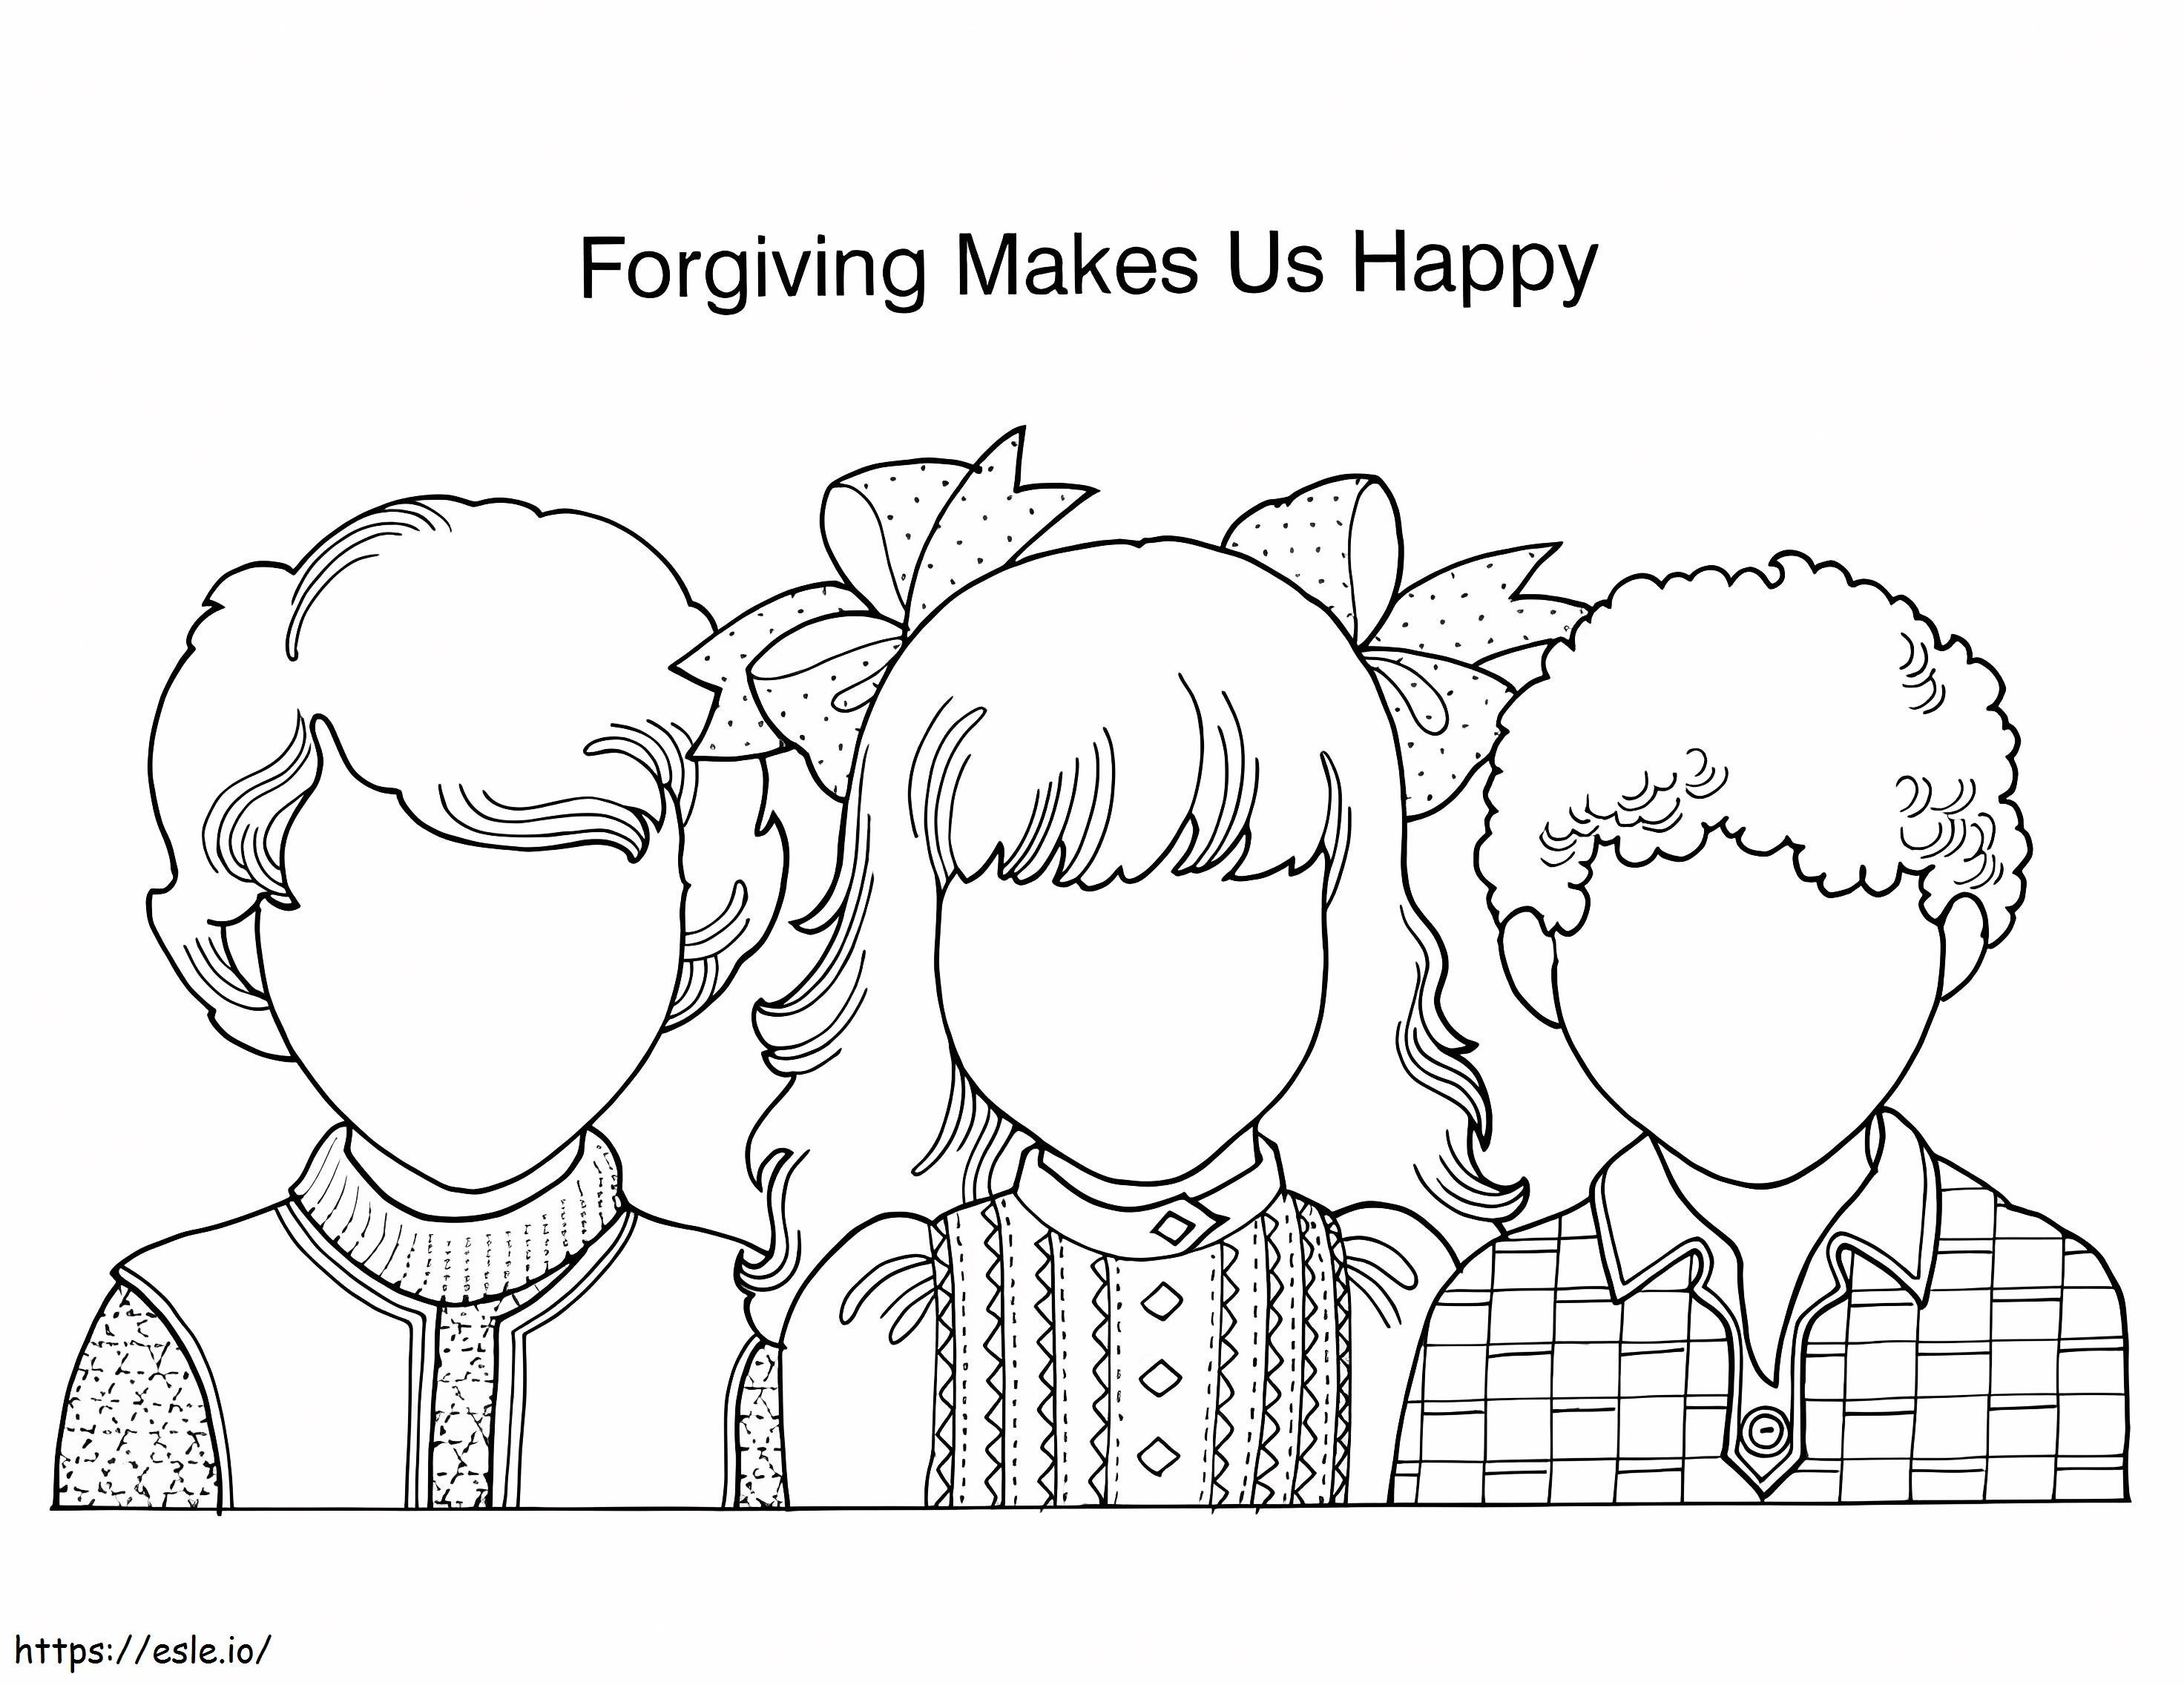 Affetmek Bizi Mutlu Eder boyama